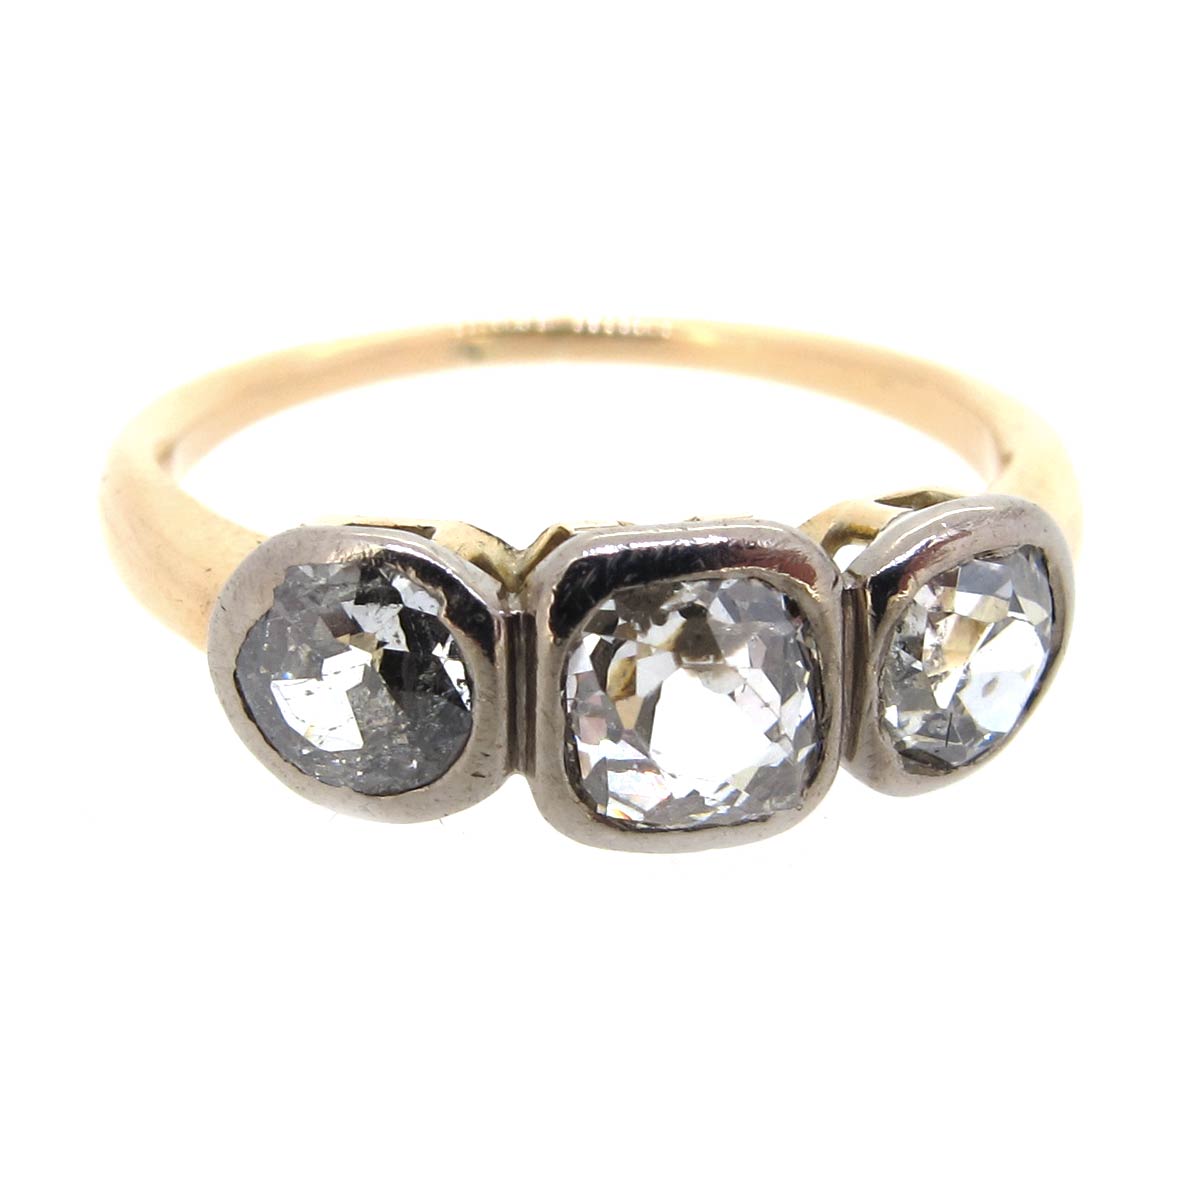 Antique Style Diamond Ring - Georgian Victorian Design | Rare Earth Jewelry